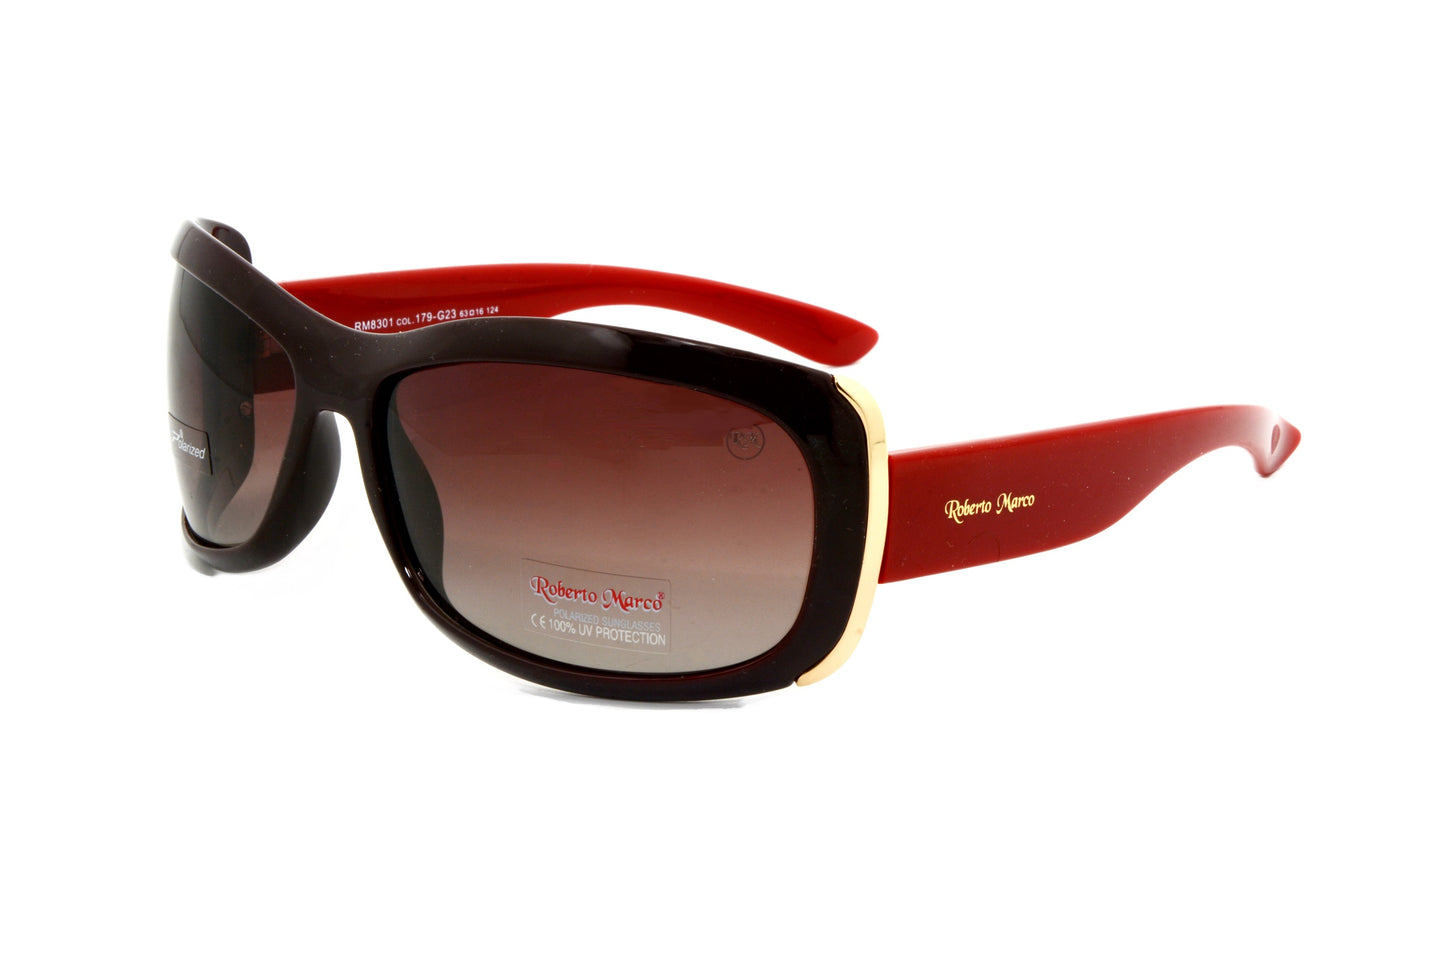 Roberto Marco sunglasses RM8301 179-G23